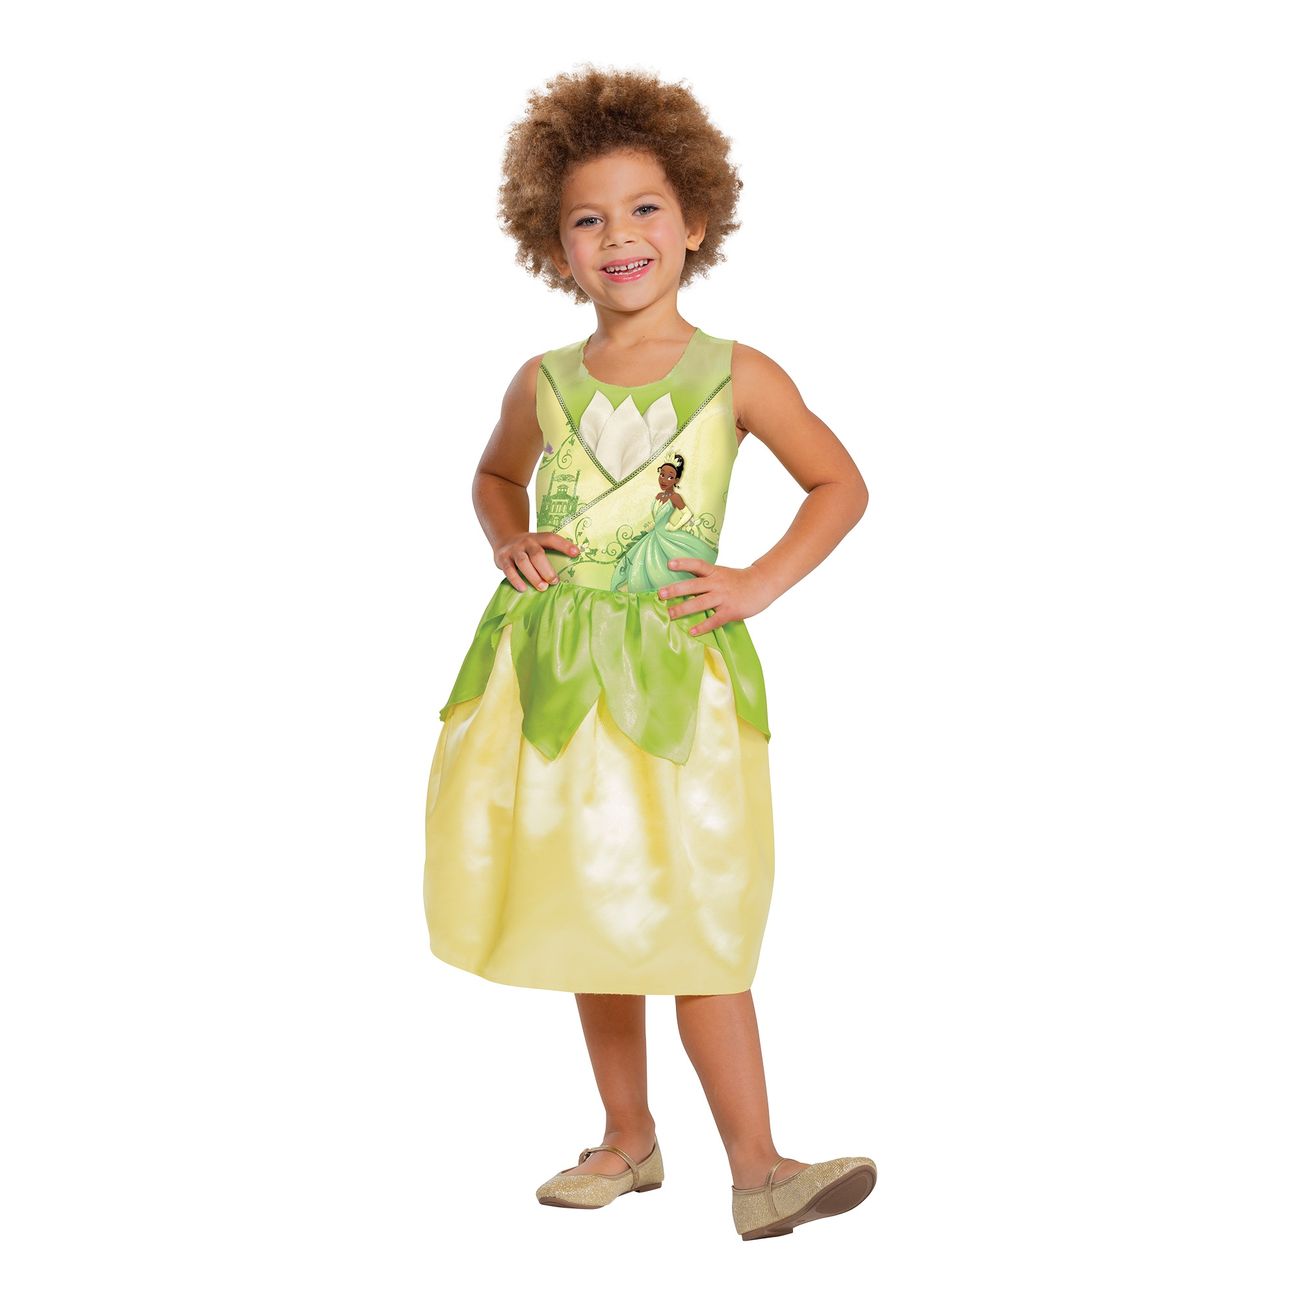 Tiana Børnekostume - Disney prinsesse kostume til børn